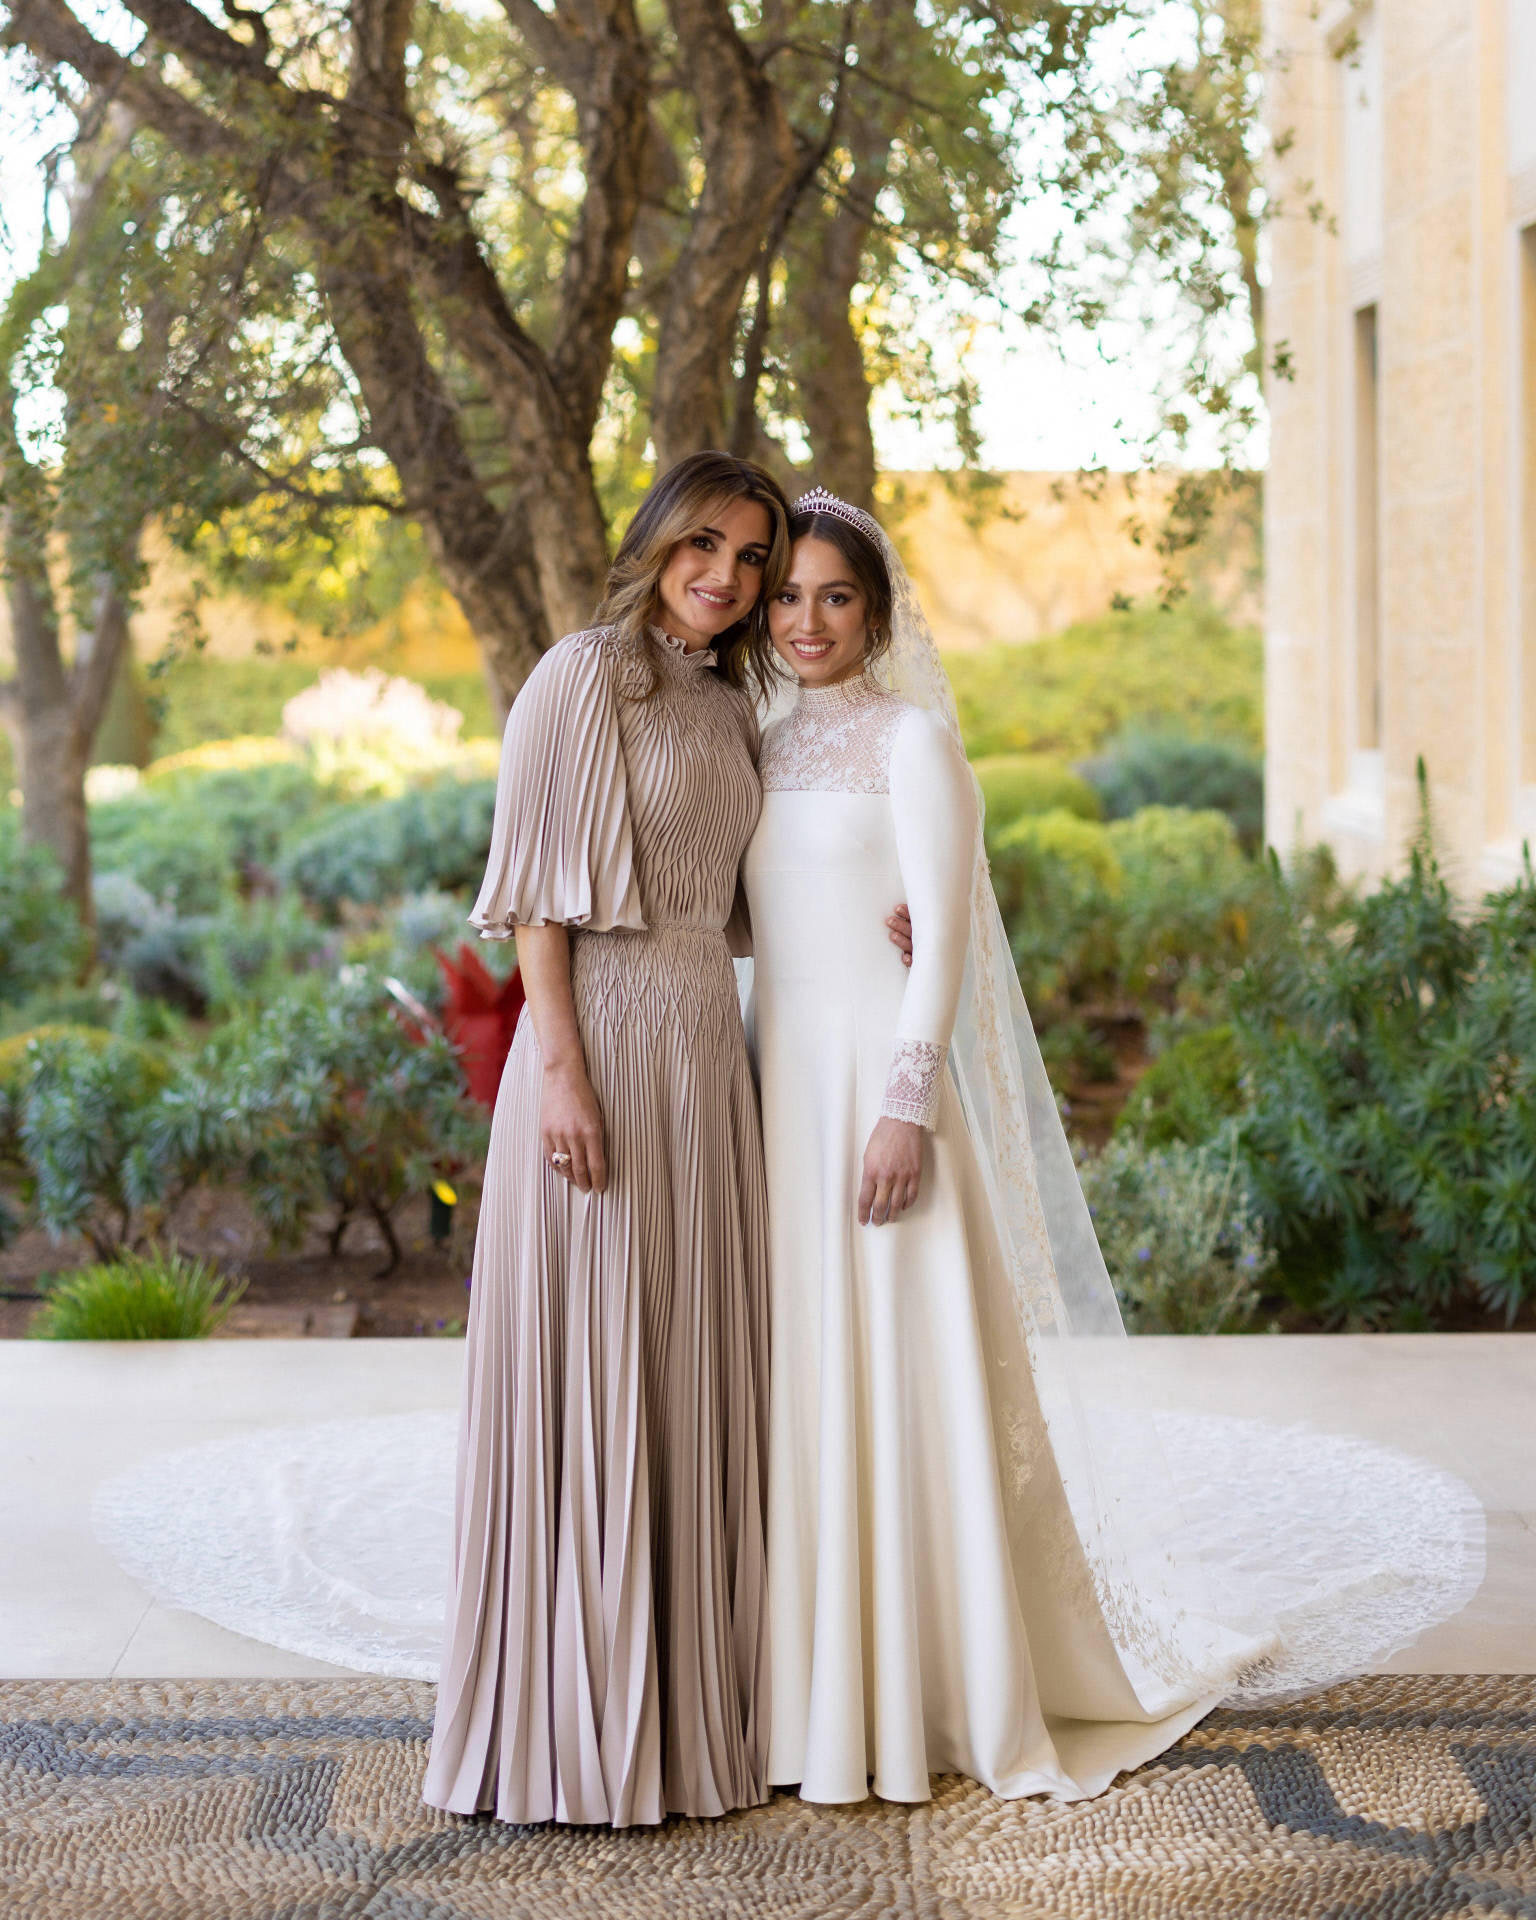 Rania de Jordania con vestido de fiesta largo plisado